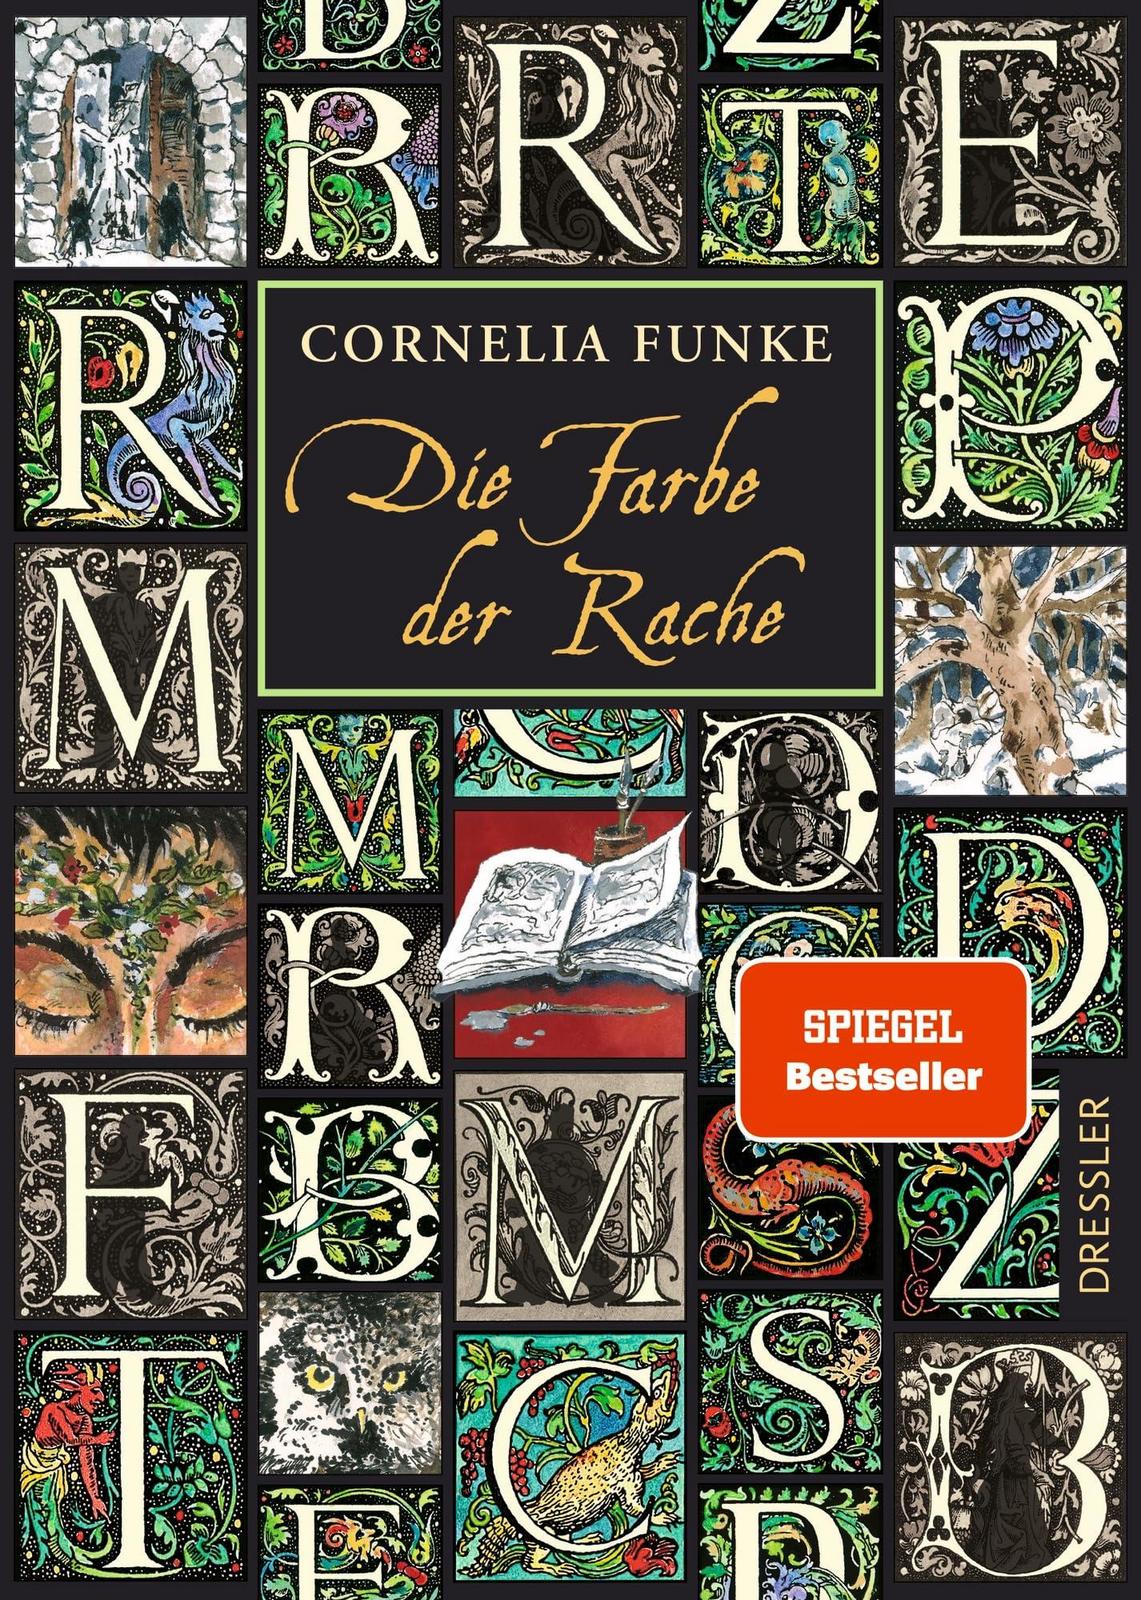 Cornelia Funke: Die Farbe der Rache (German language, Dressler Verlag)